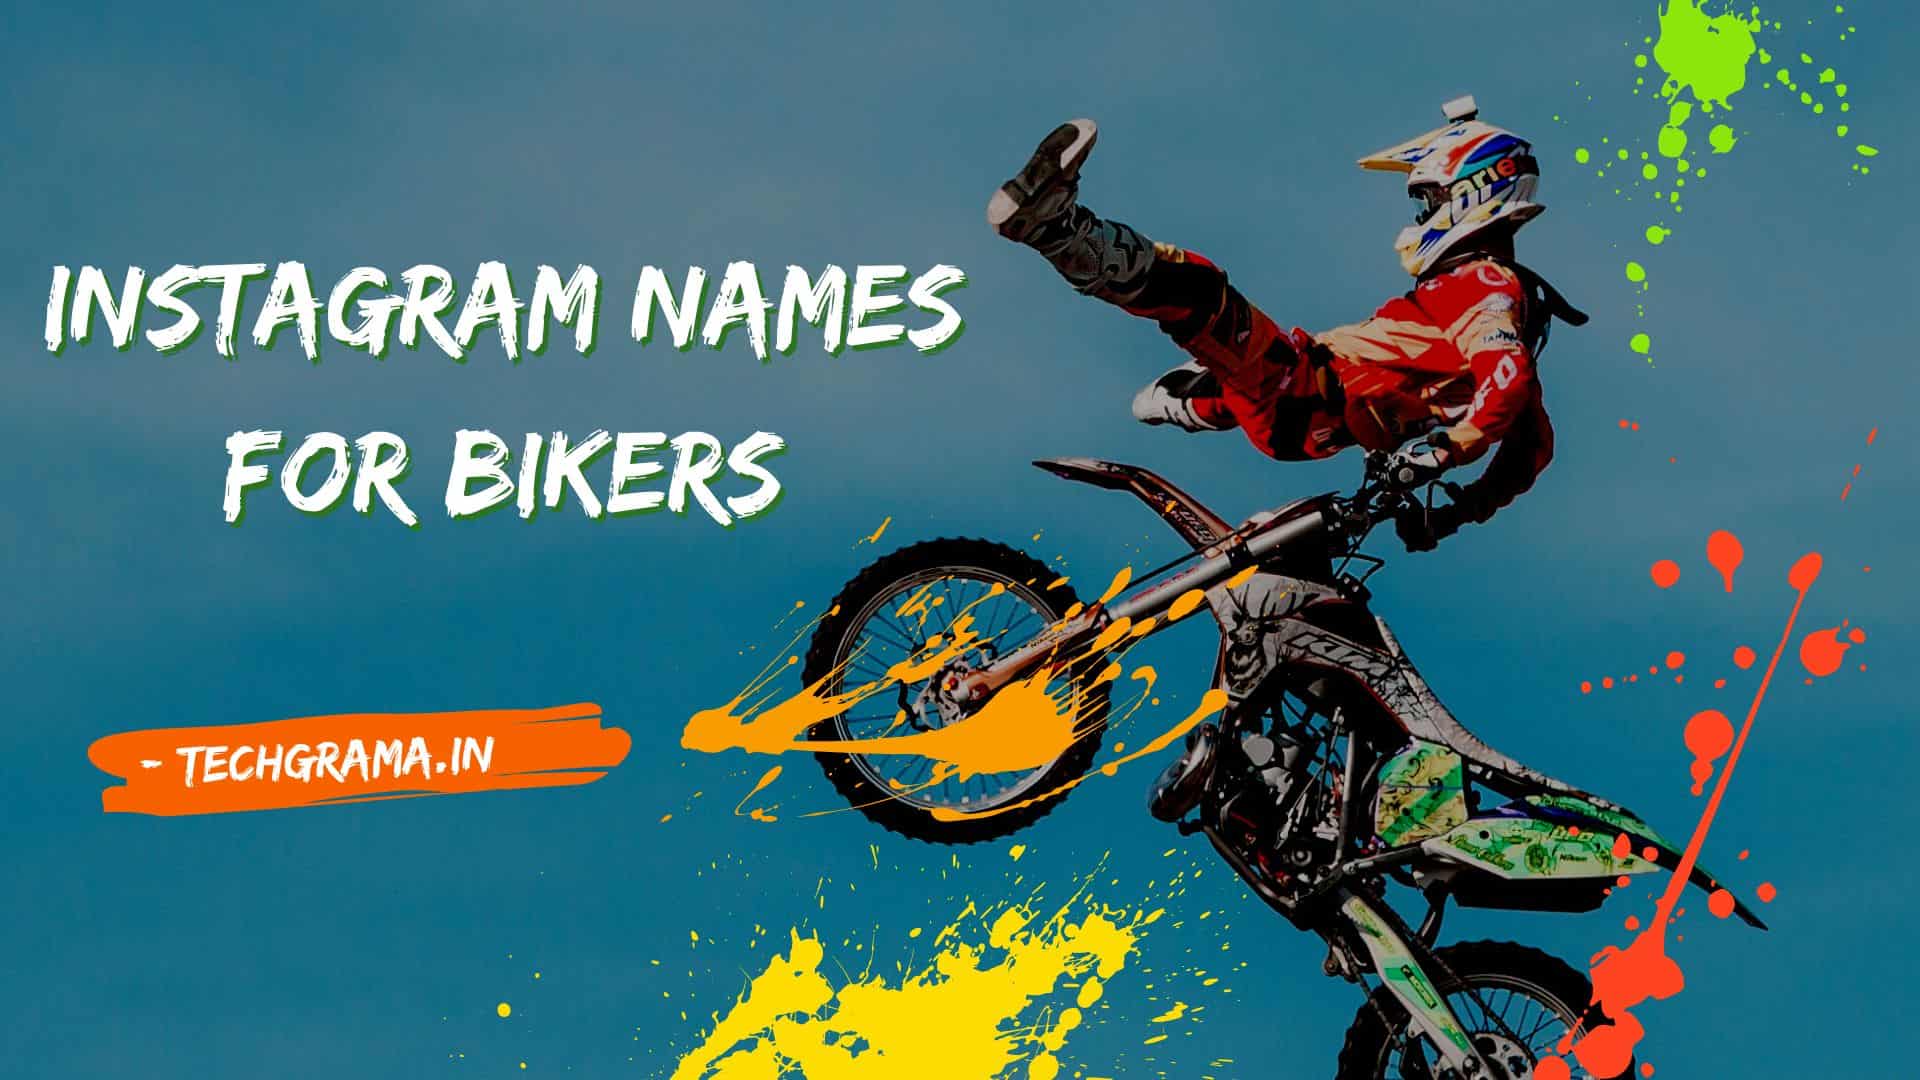 Best Instagram Names For Bikers, Bike Rider Names, Cool Biker Names, Biker Girl Instagram Names, Nickname For Bike Lovers, Biker Names For Instagram, Girl Bike Rider Names, Cool Instagram Usernames For Bikers, Instagram Biker Names for Girls, and Unique Instagram Names For Bikers.